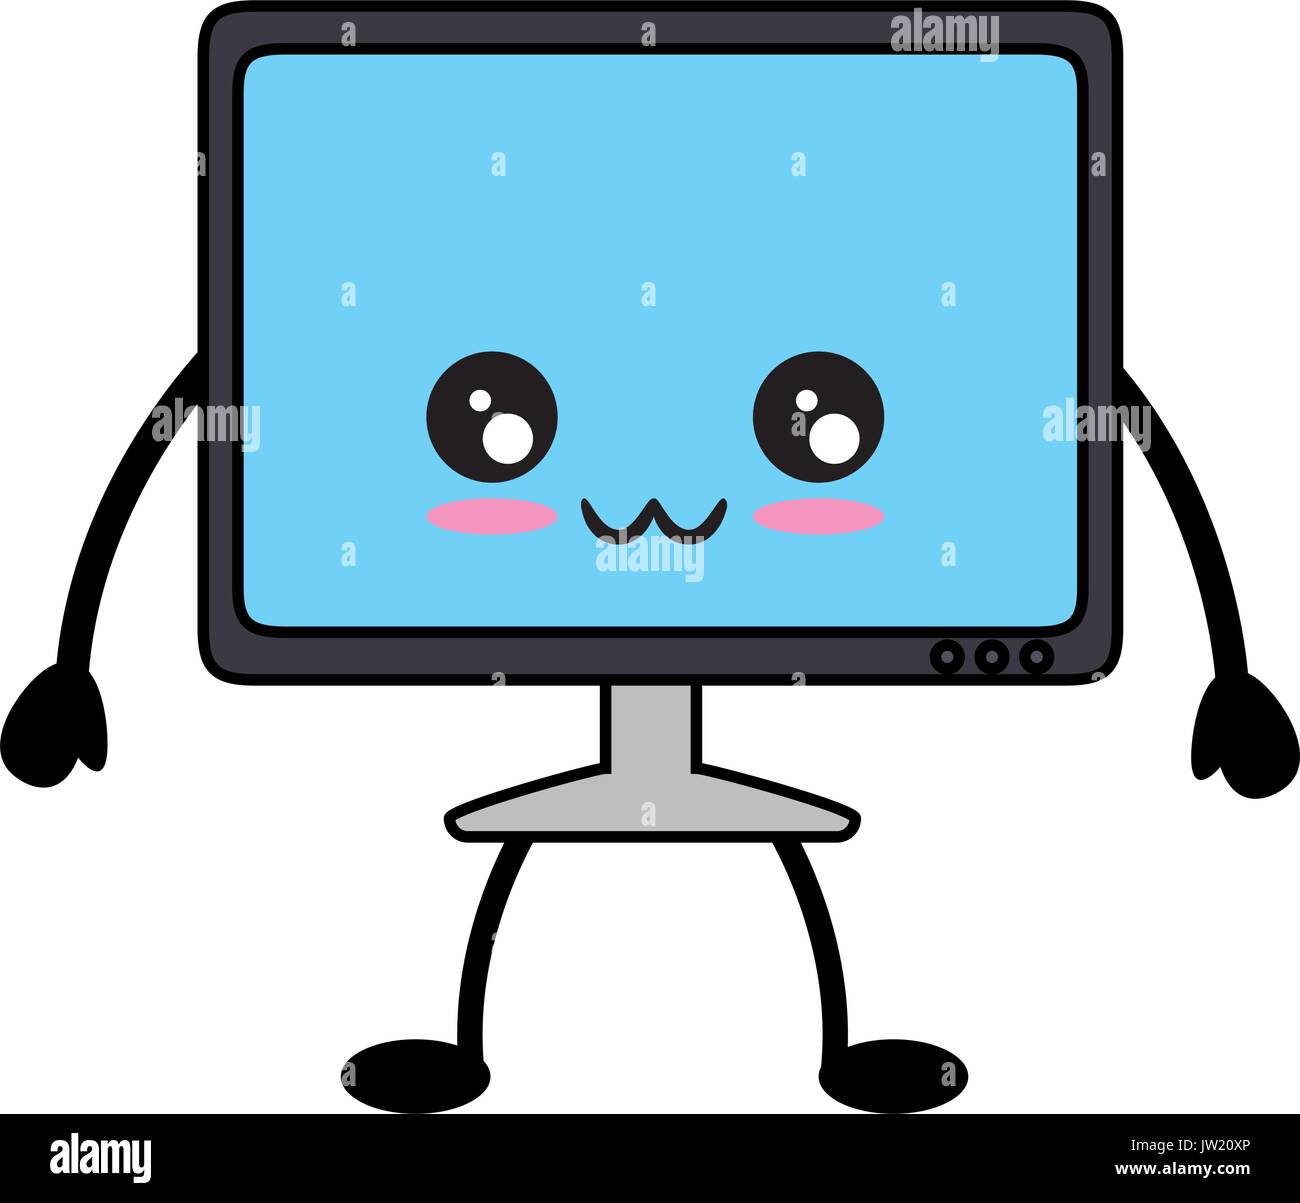 Vecteur Stock Computer with keyboard cute kawaii cartoon vector  illustration icon